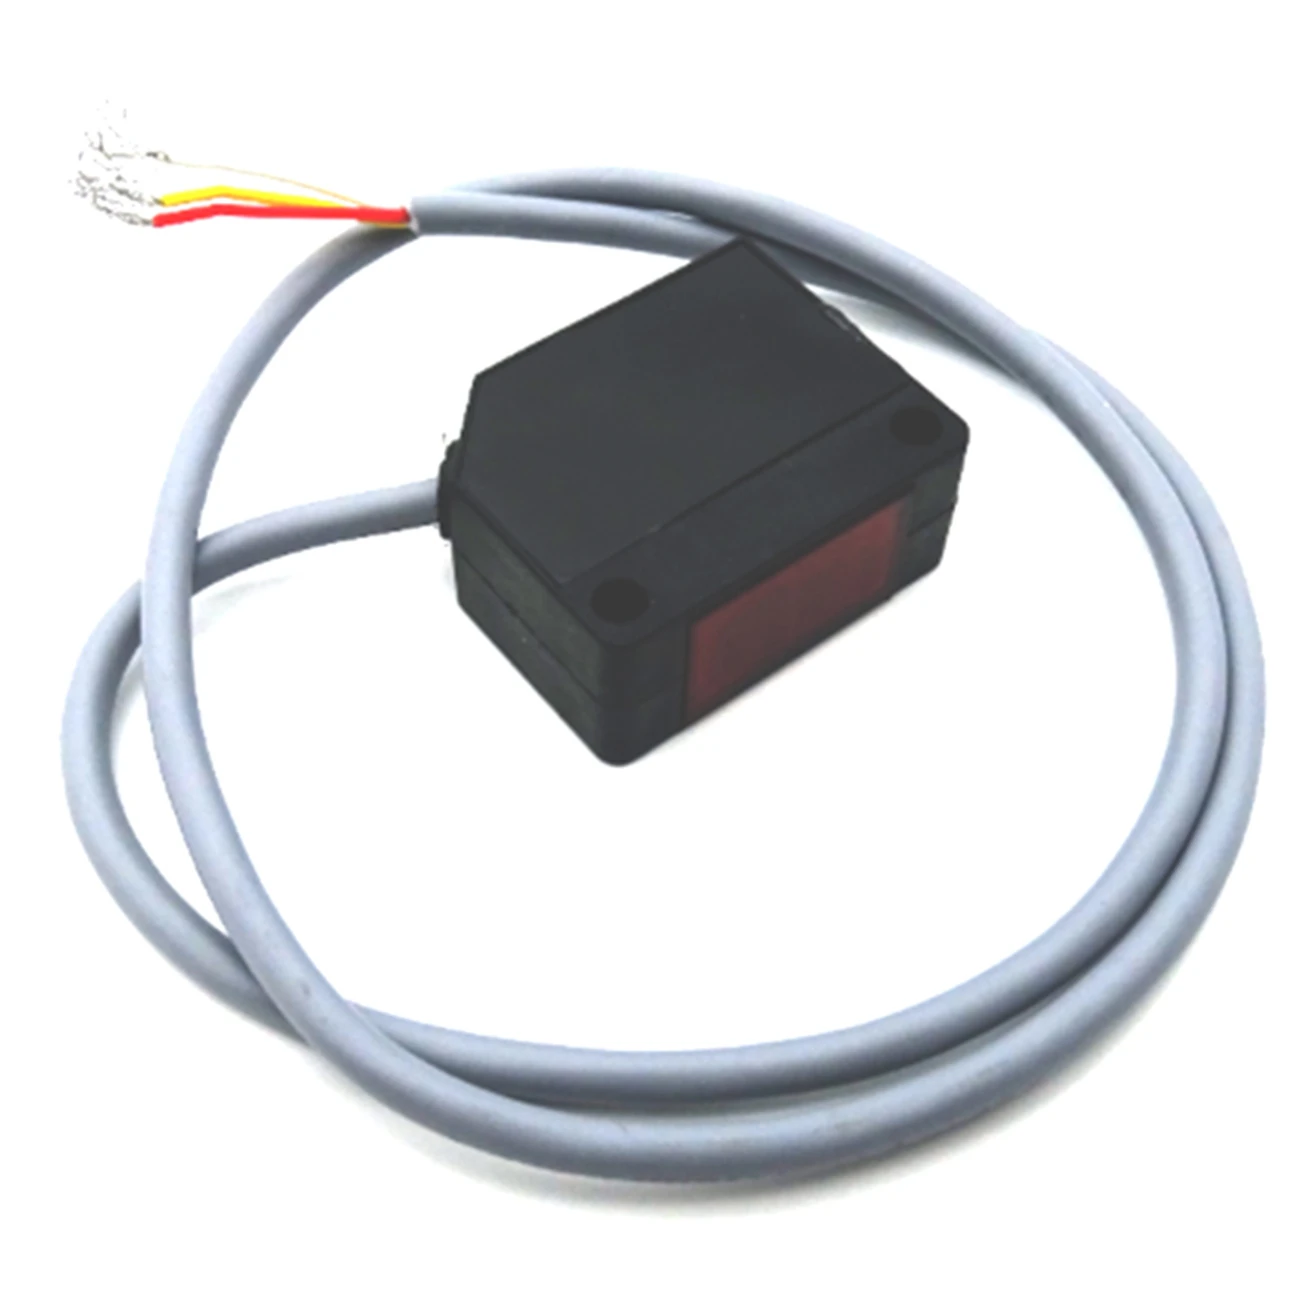 Interruptores de sensor de detección fotoeléctrica infrarroja E18-B03P 